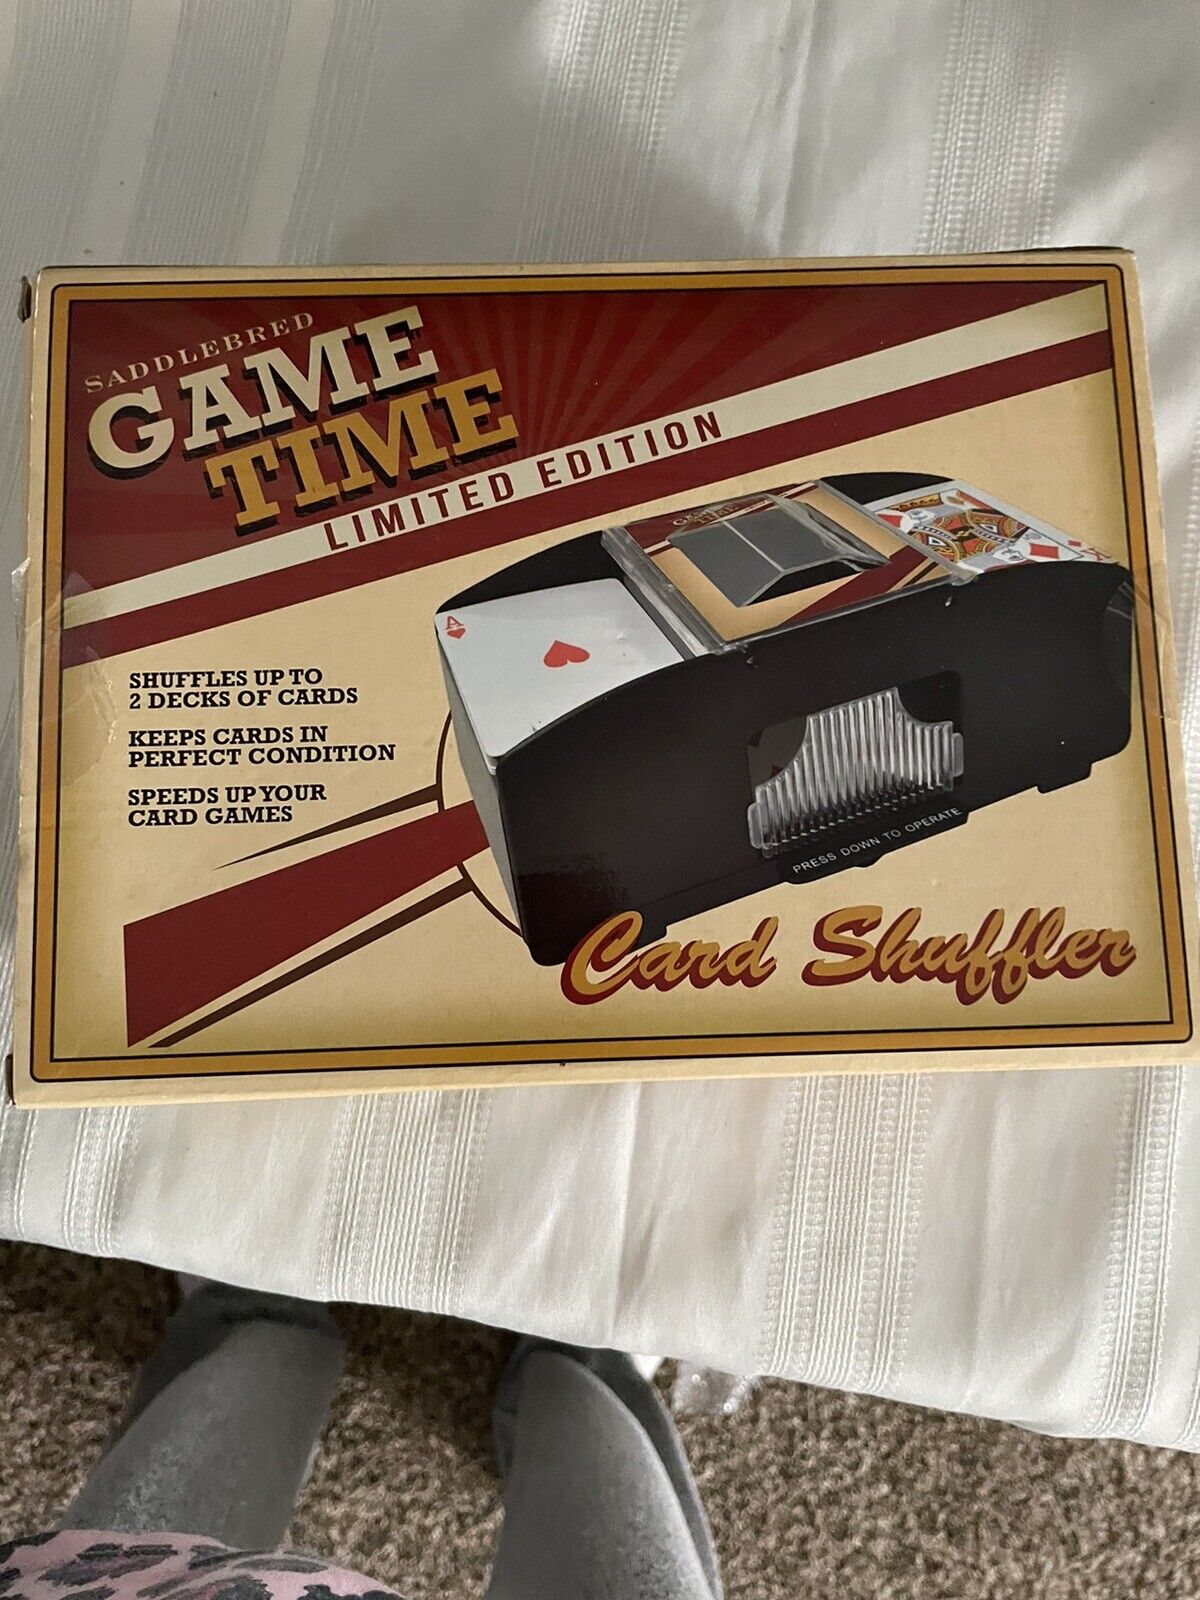 Saddlebred Game Time card shuffler Limited Edition NIB